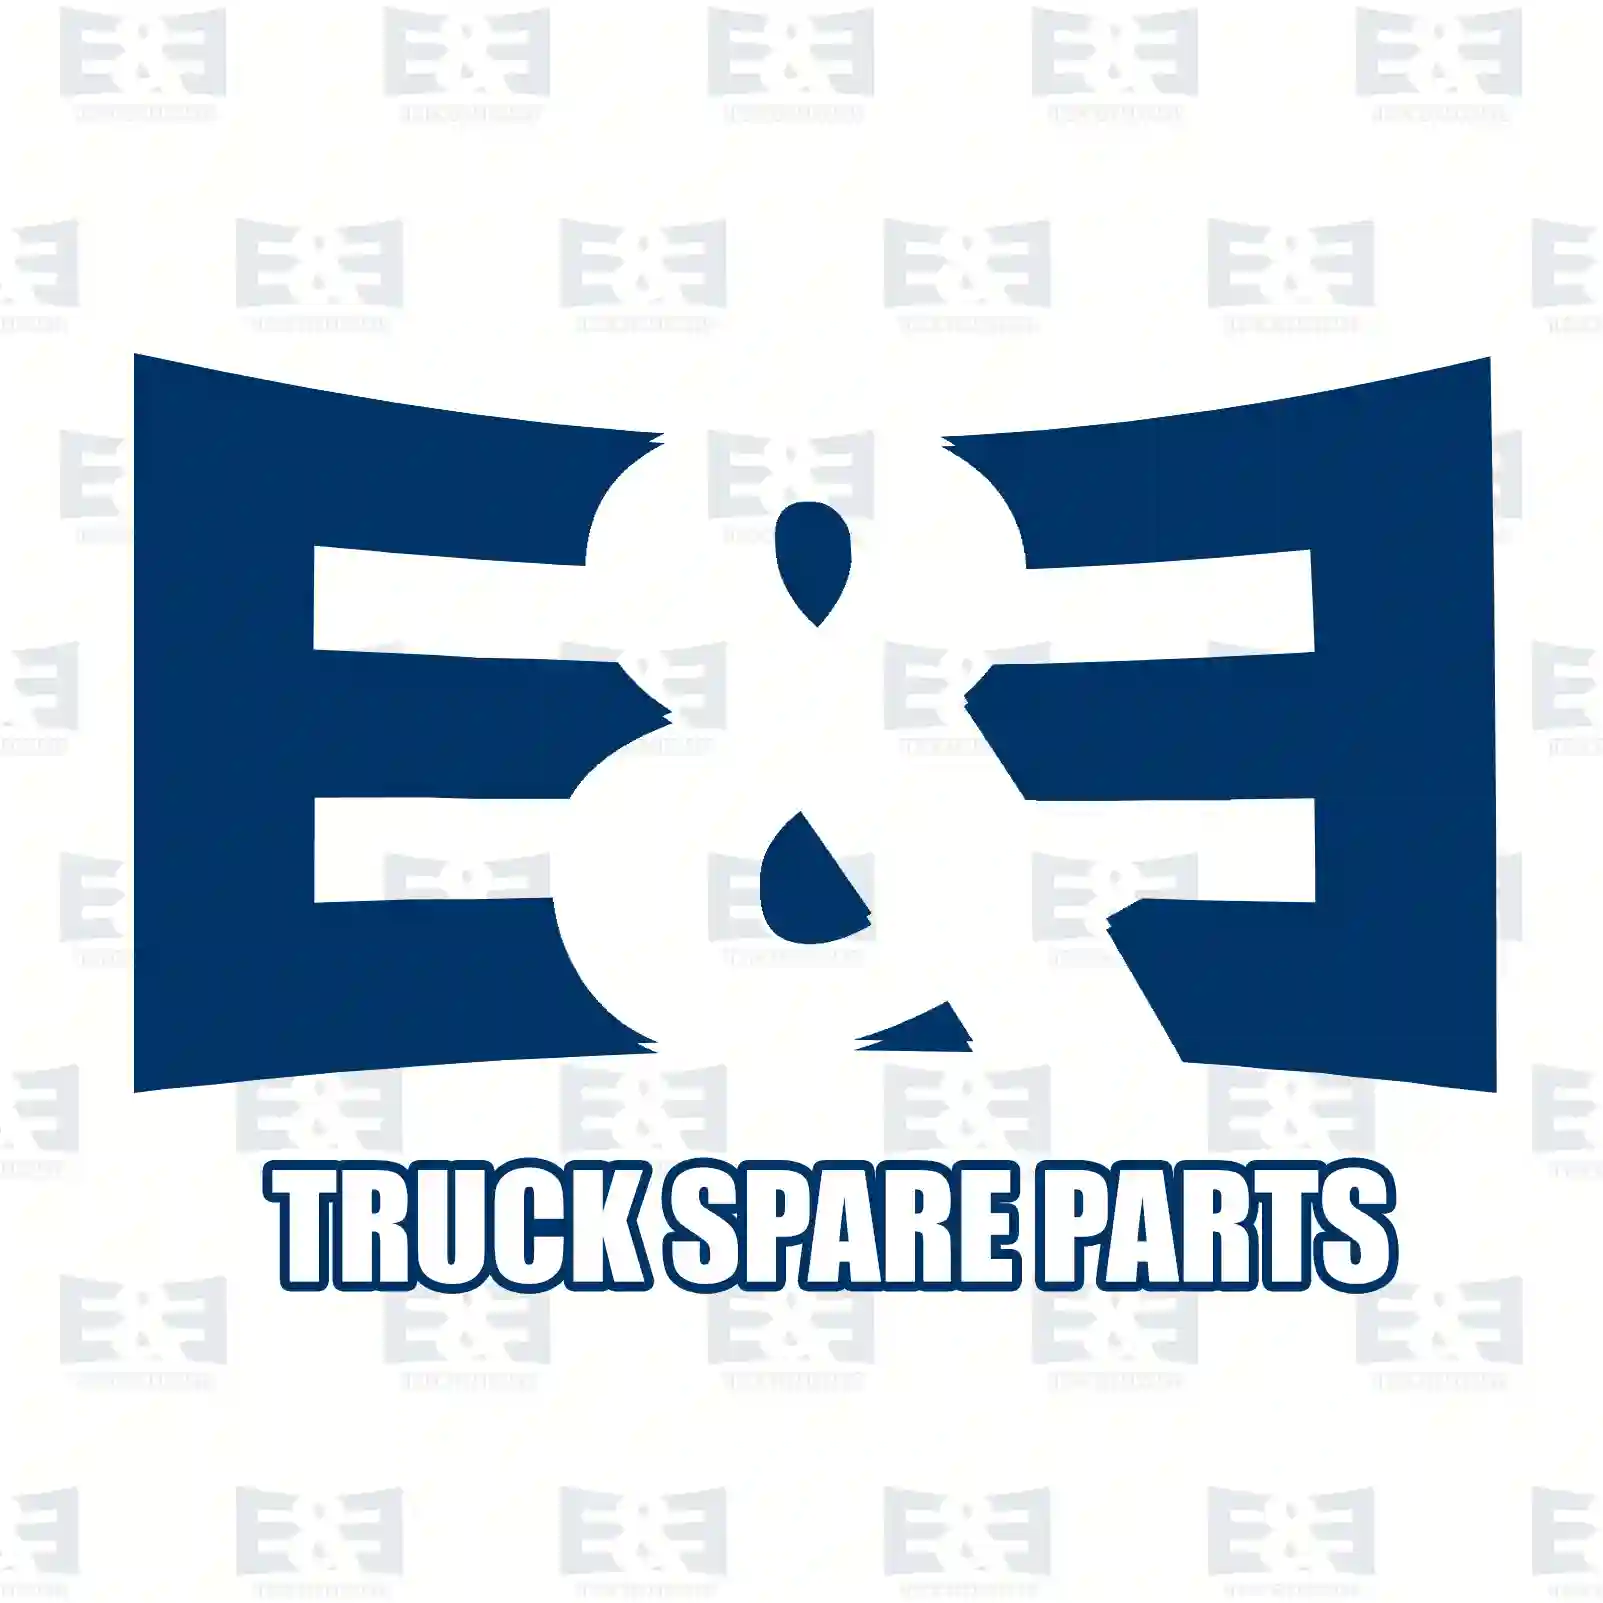 Position sensor, camshaft, 2E2299997, 61537728, 651905 ||  2E2299997 E&E Truck Spare Parts | Truck Spare Parts, Auotomotive Spare Parts Position sensor, camshaft, 2E2299997, 61537728, 651905 ||  2E2299997 E&E Truck Spare Parts | Truck Spare Parts, Auotomotive Spare Parts